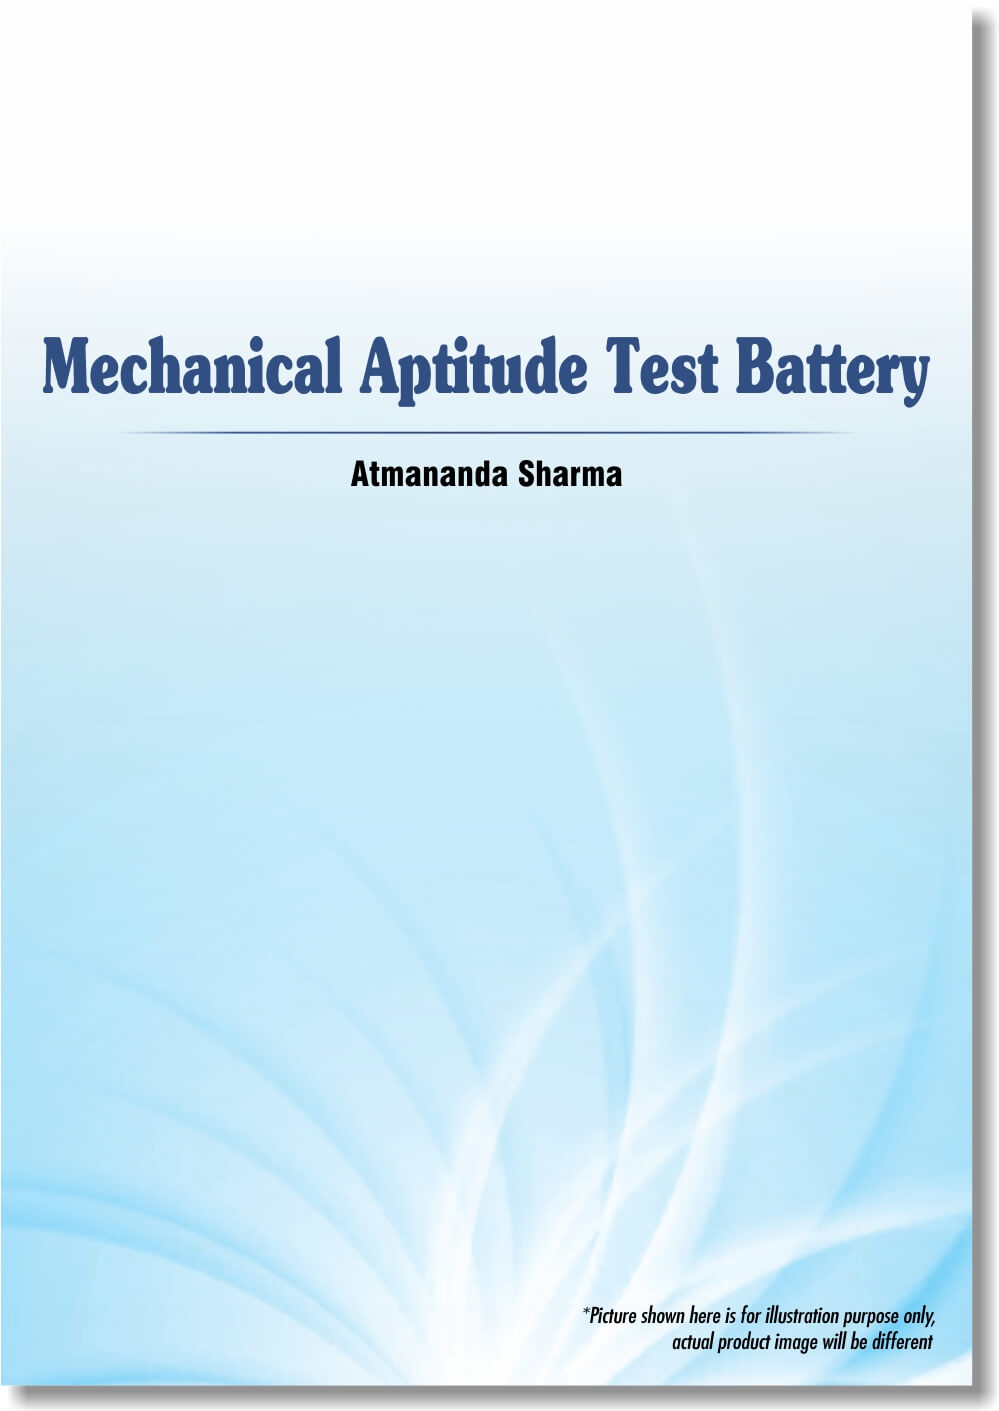 mechanical-aptitude-test-battery